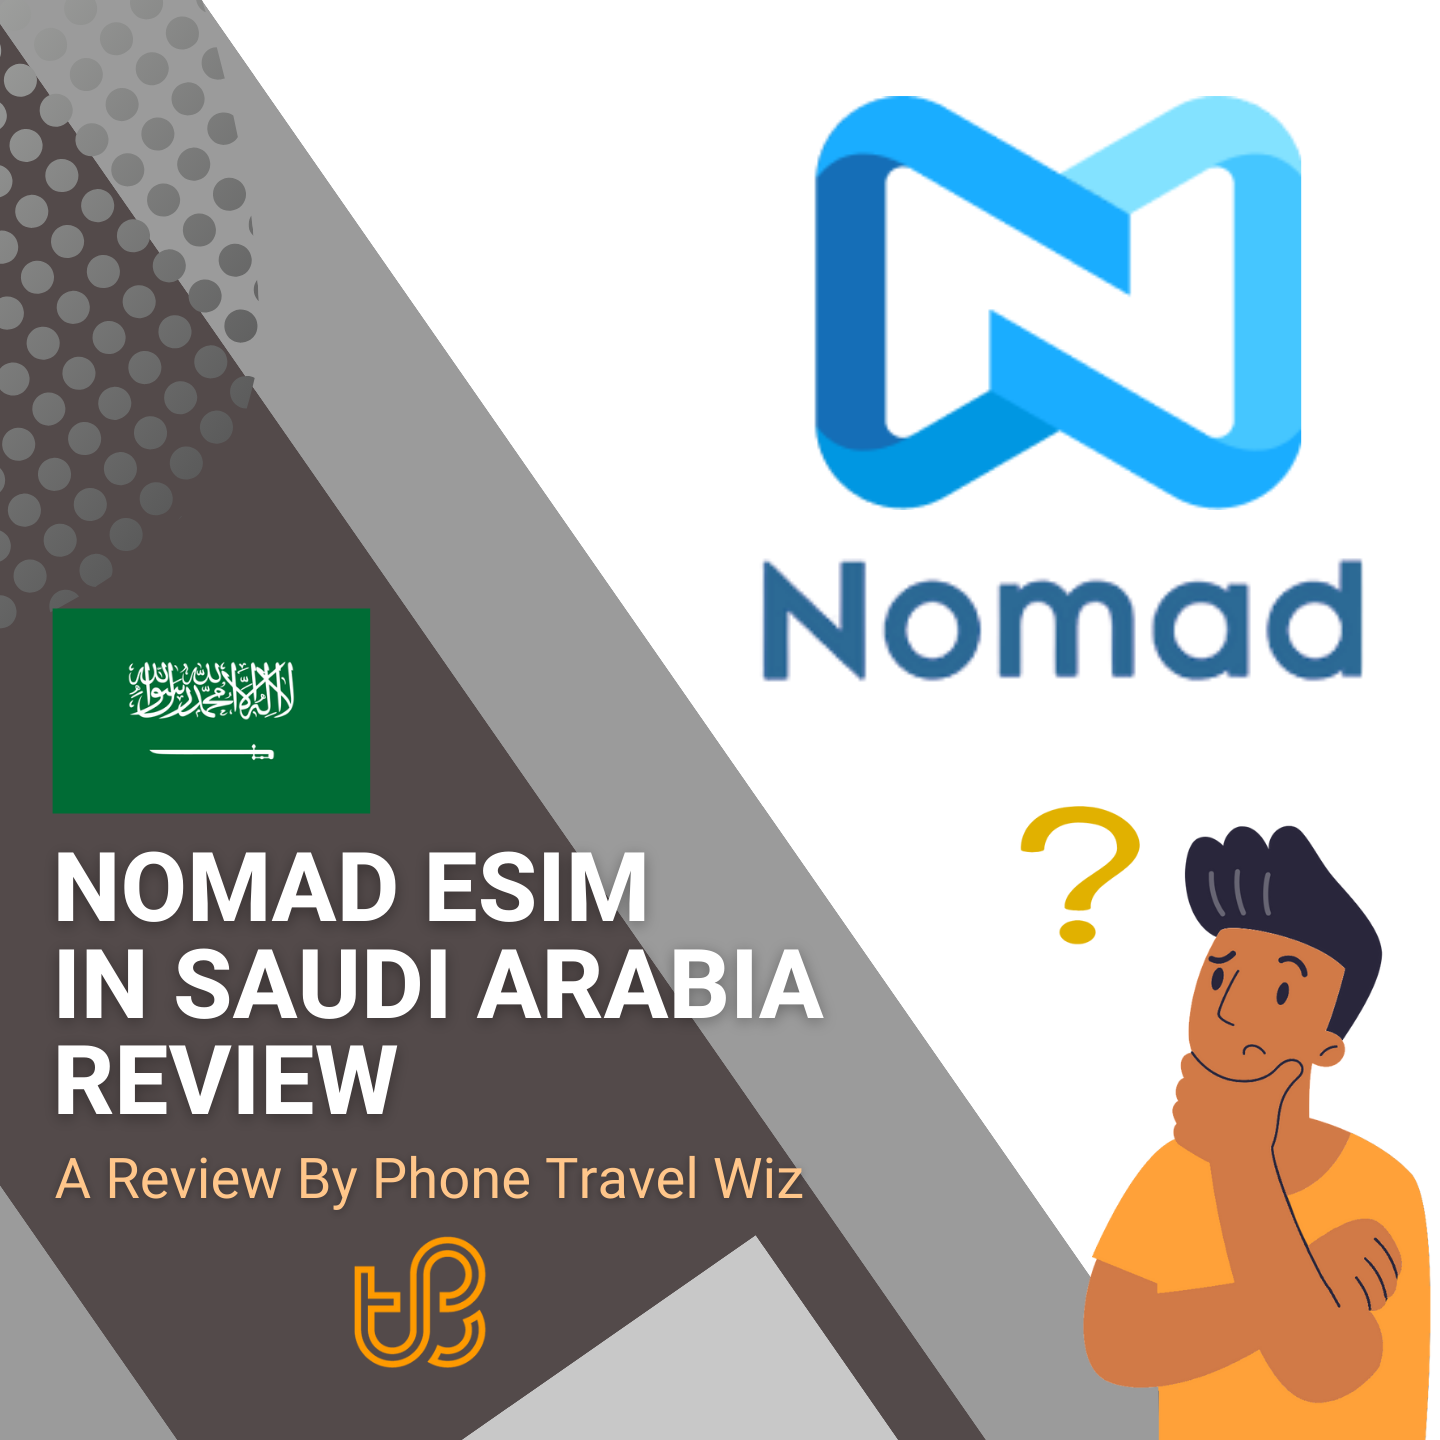 Nomad eSIM in Saudi Arabia Review by Phone Travel Wiz